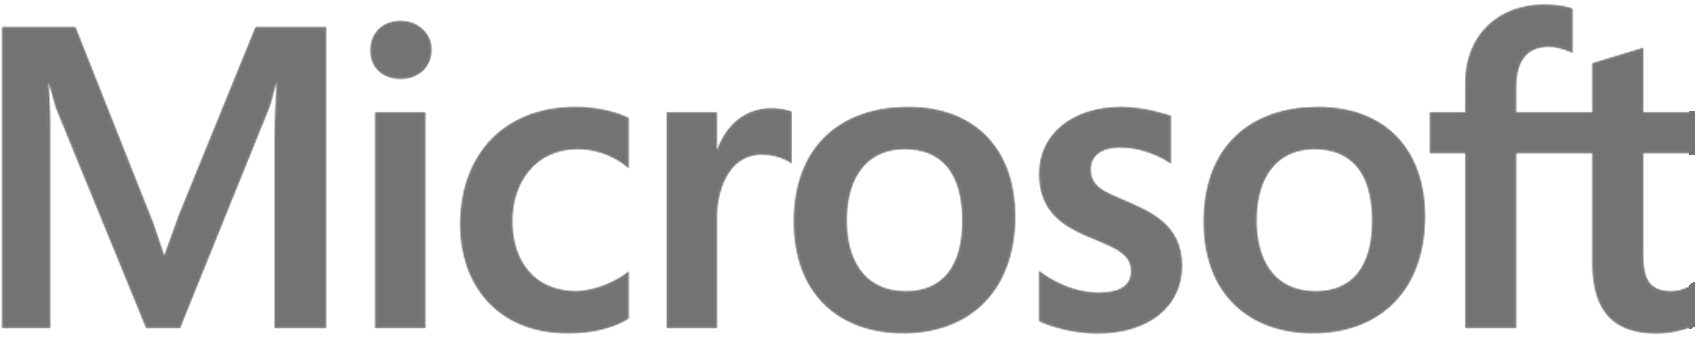 Microsoft Logo Gray Scale PNG image